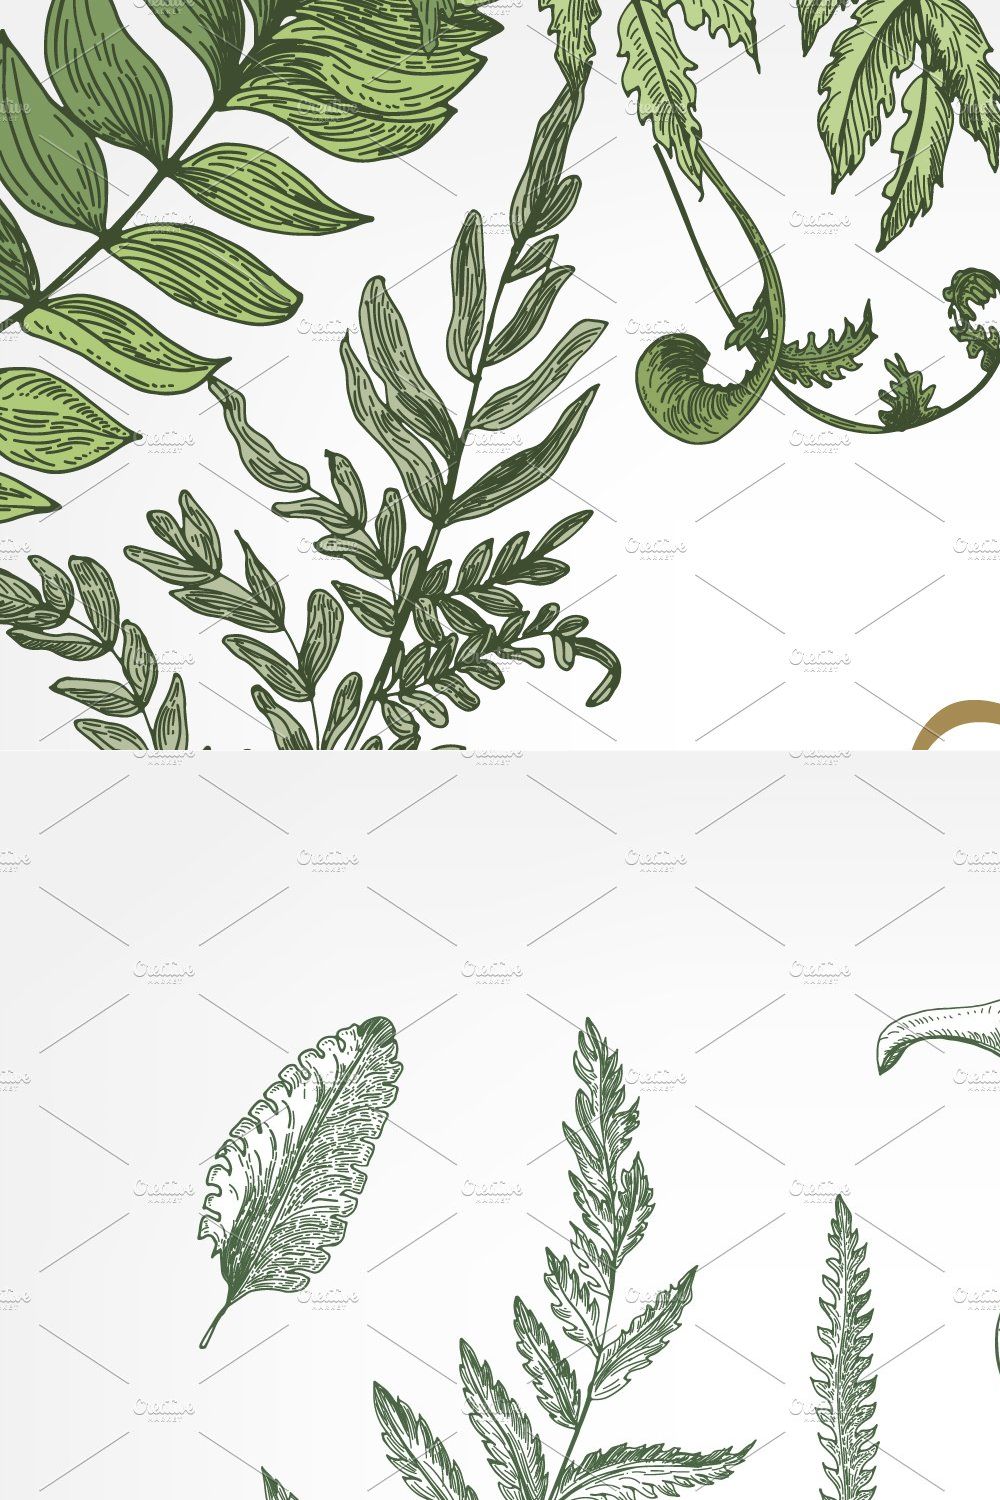 Ferns green foliage - set, backdrop pinterest preview image.